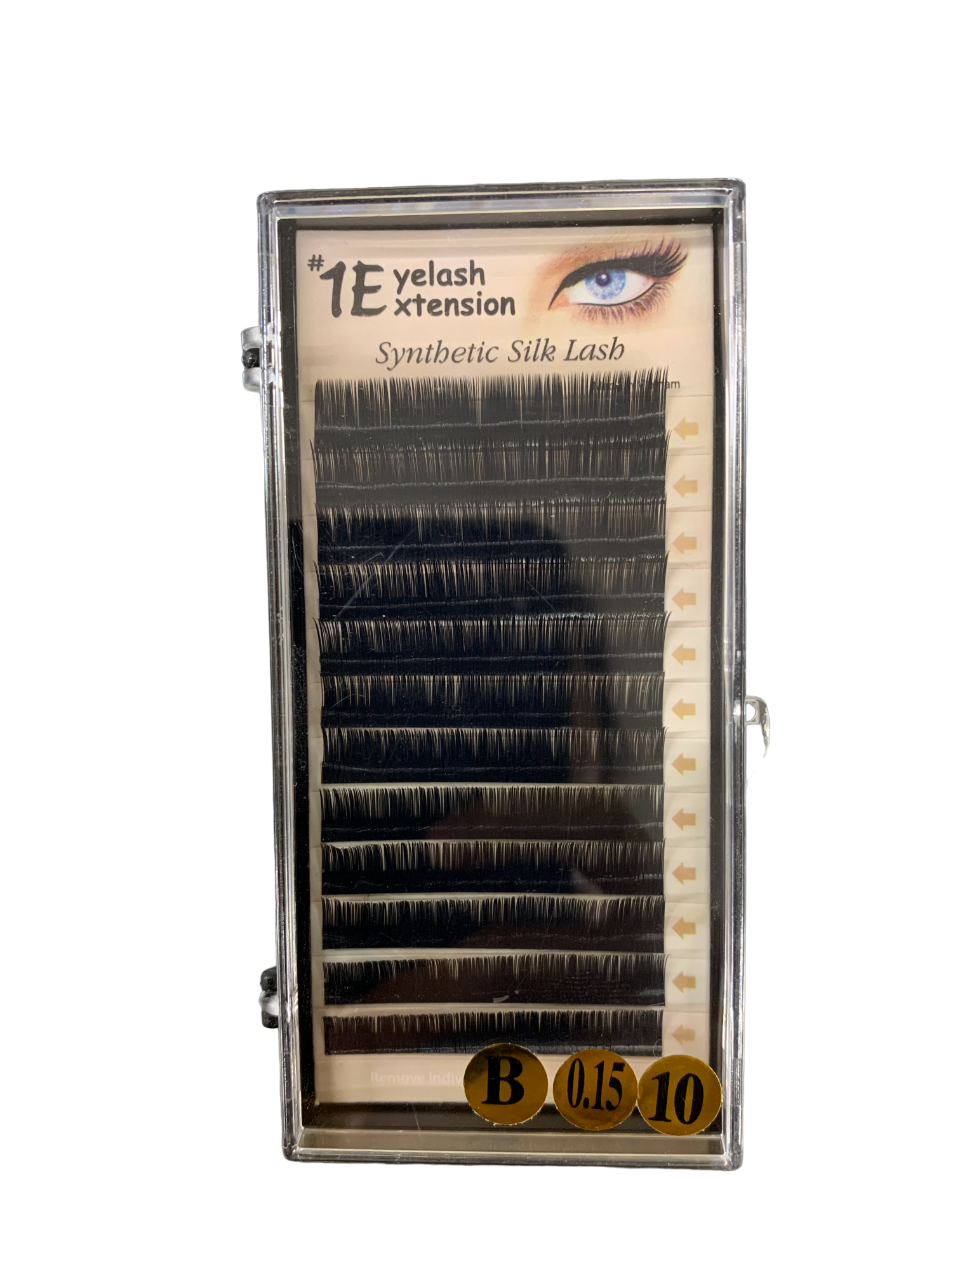 1E Eyelash Extension Synthetic Silk Lash B-0.15-10